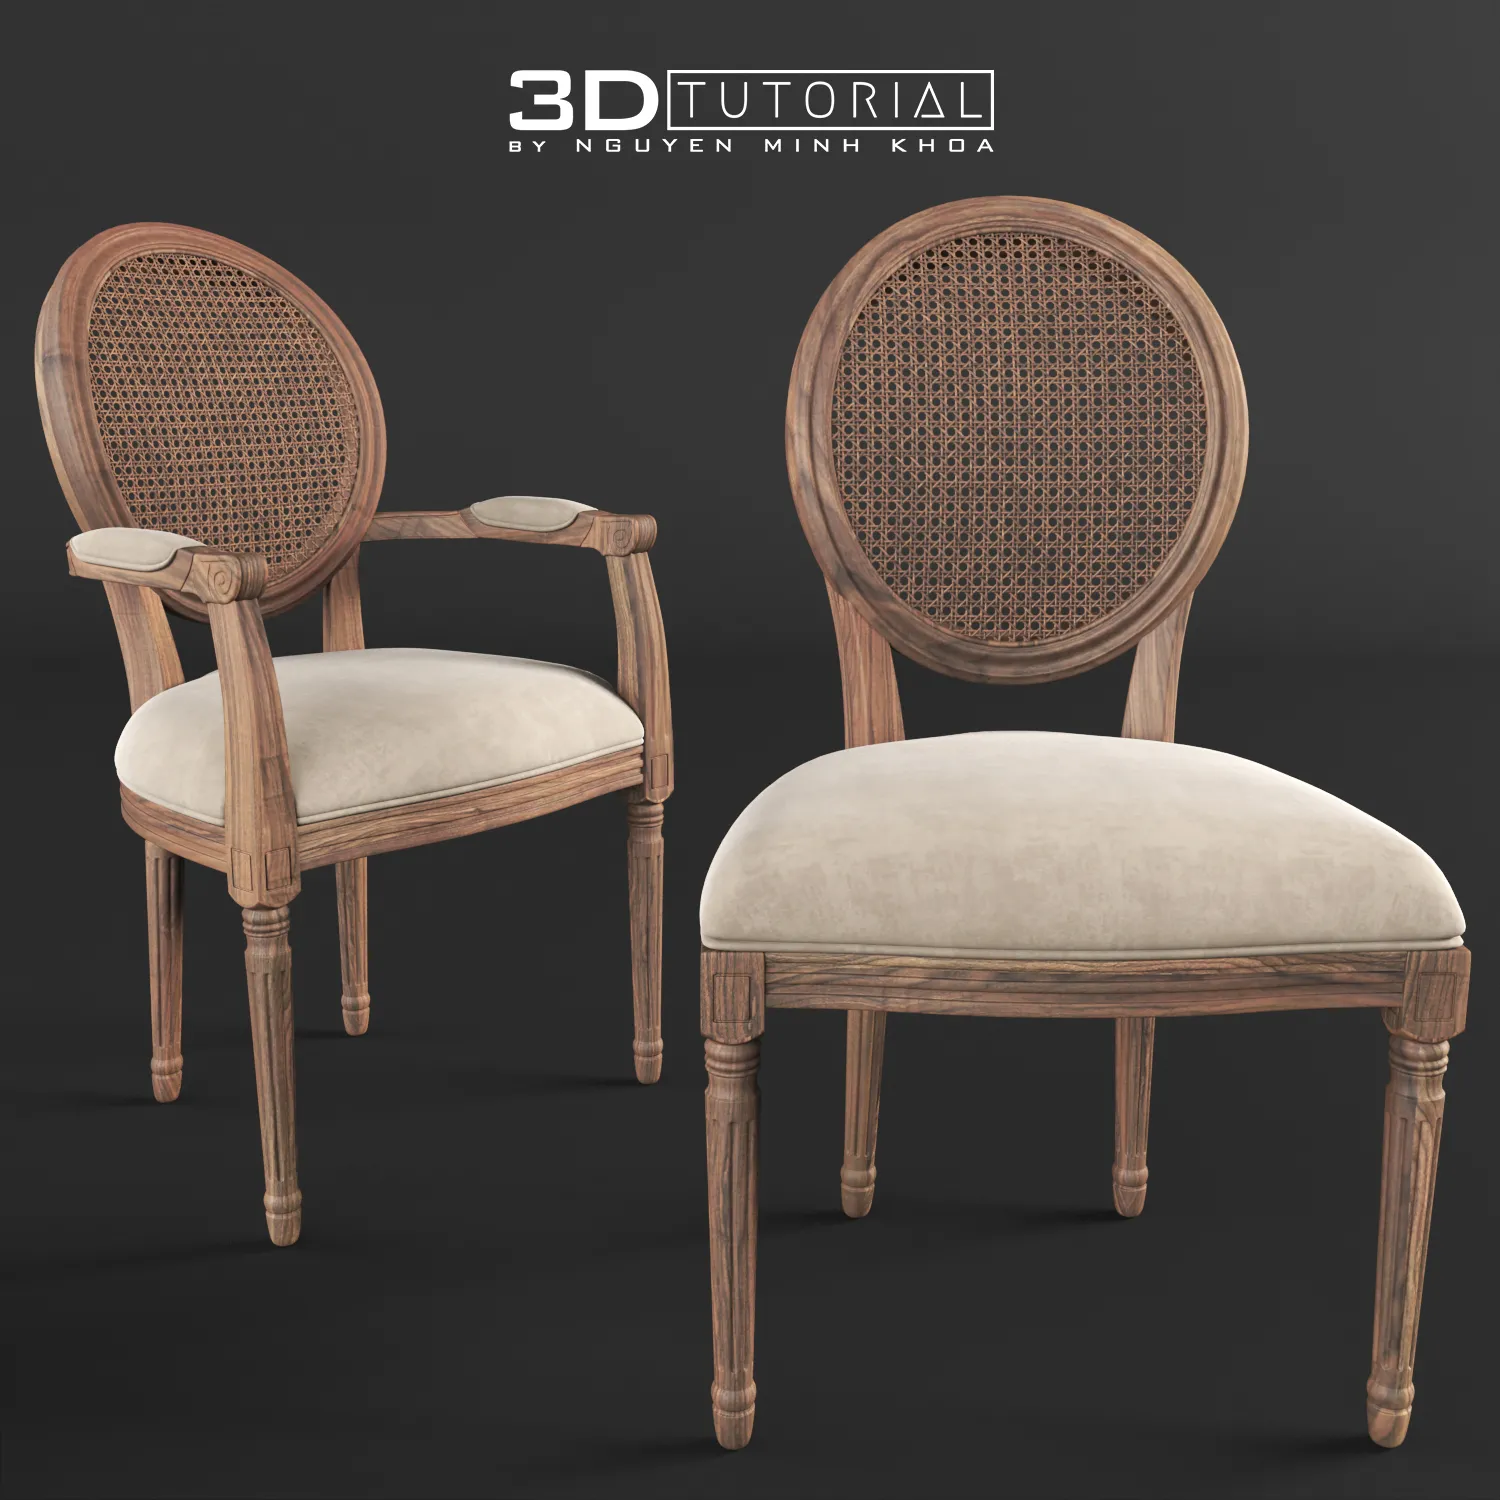 FURNITURE 3D MODELS – Beige Louis Chairs model by NguyenMinhKhoa